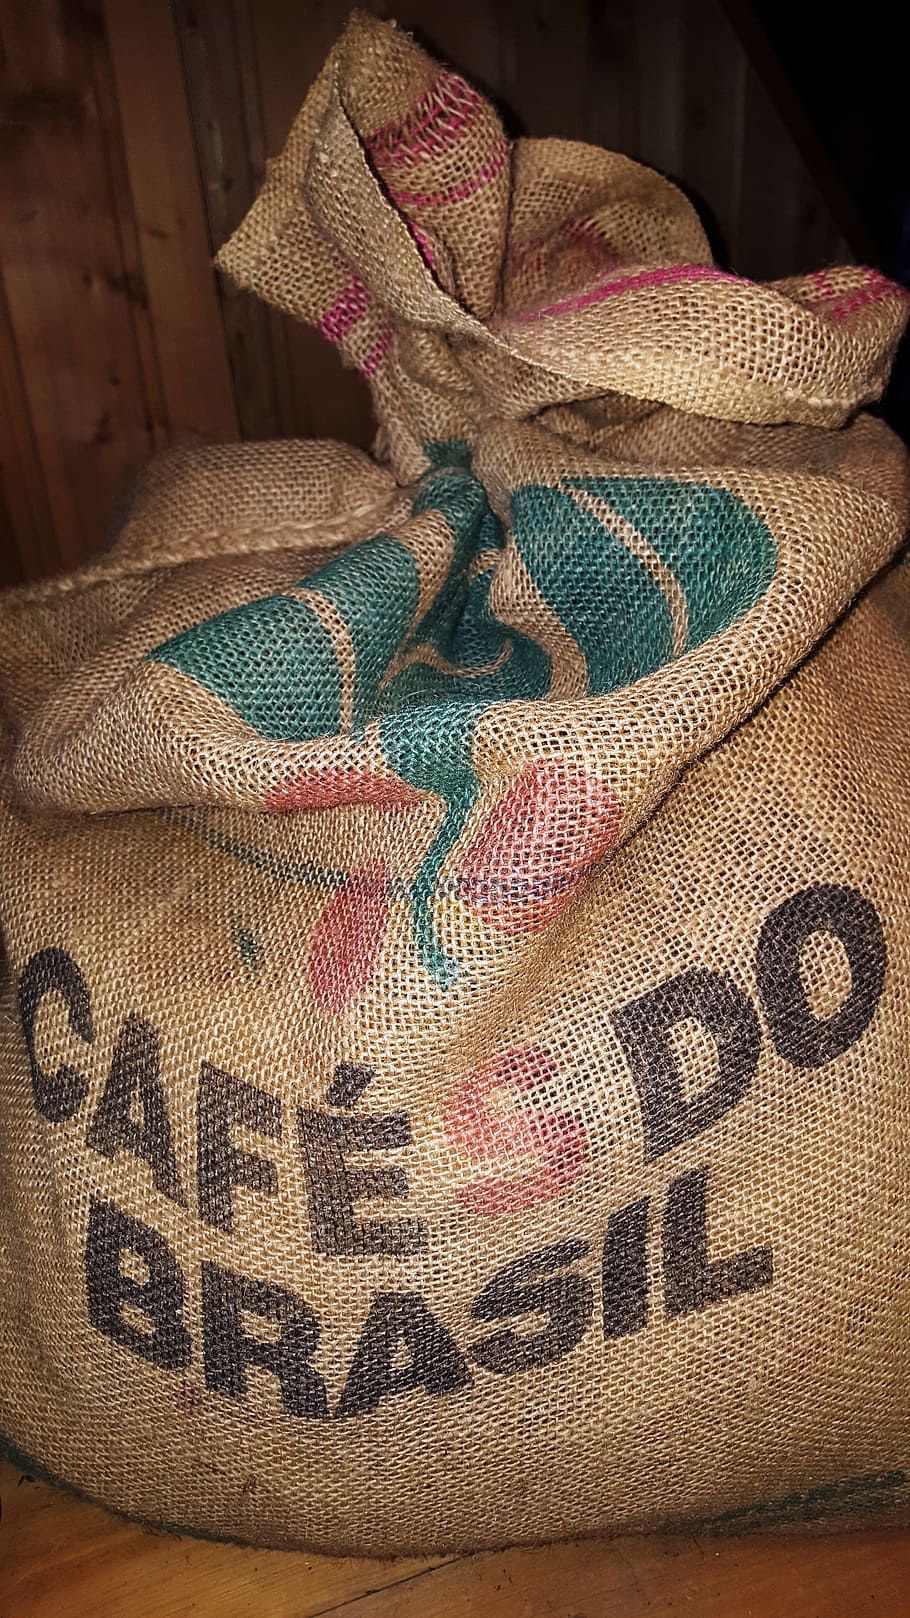 coffee, bag, brown, brasil, textile, indoors, sack, close-up, still life, pattern